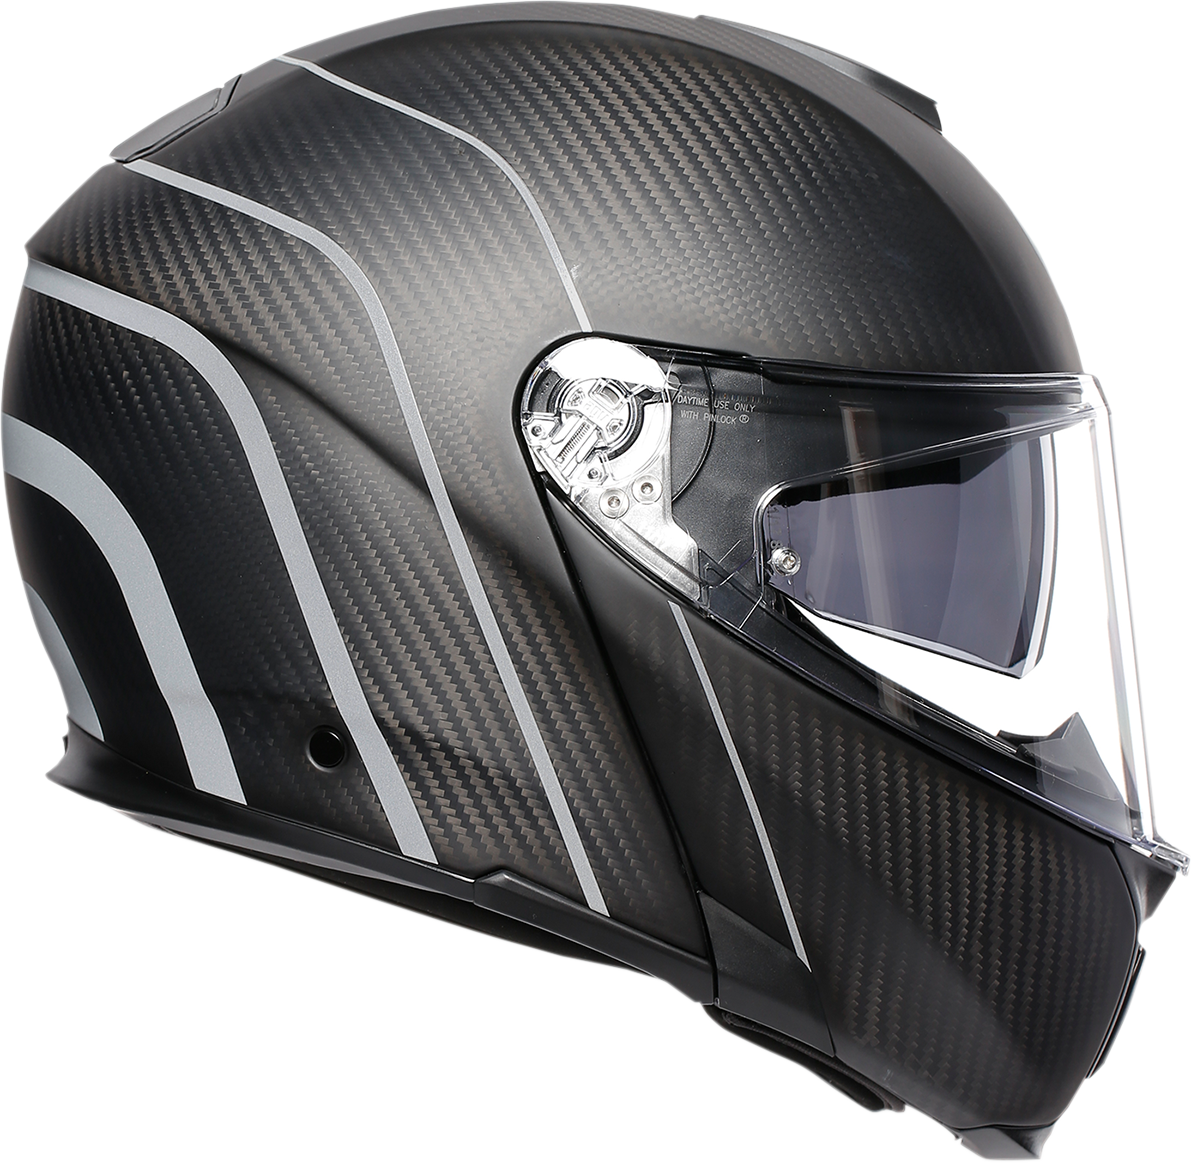 AGV SportModular Helmet - Refractive - XL 211201O2IY00715